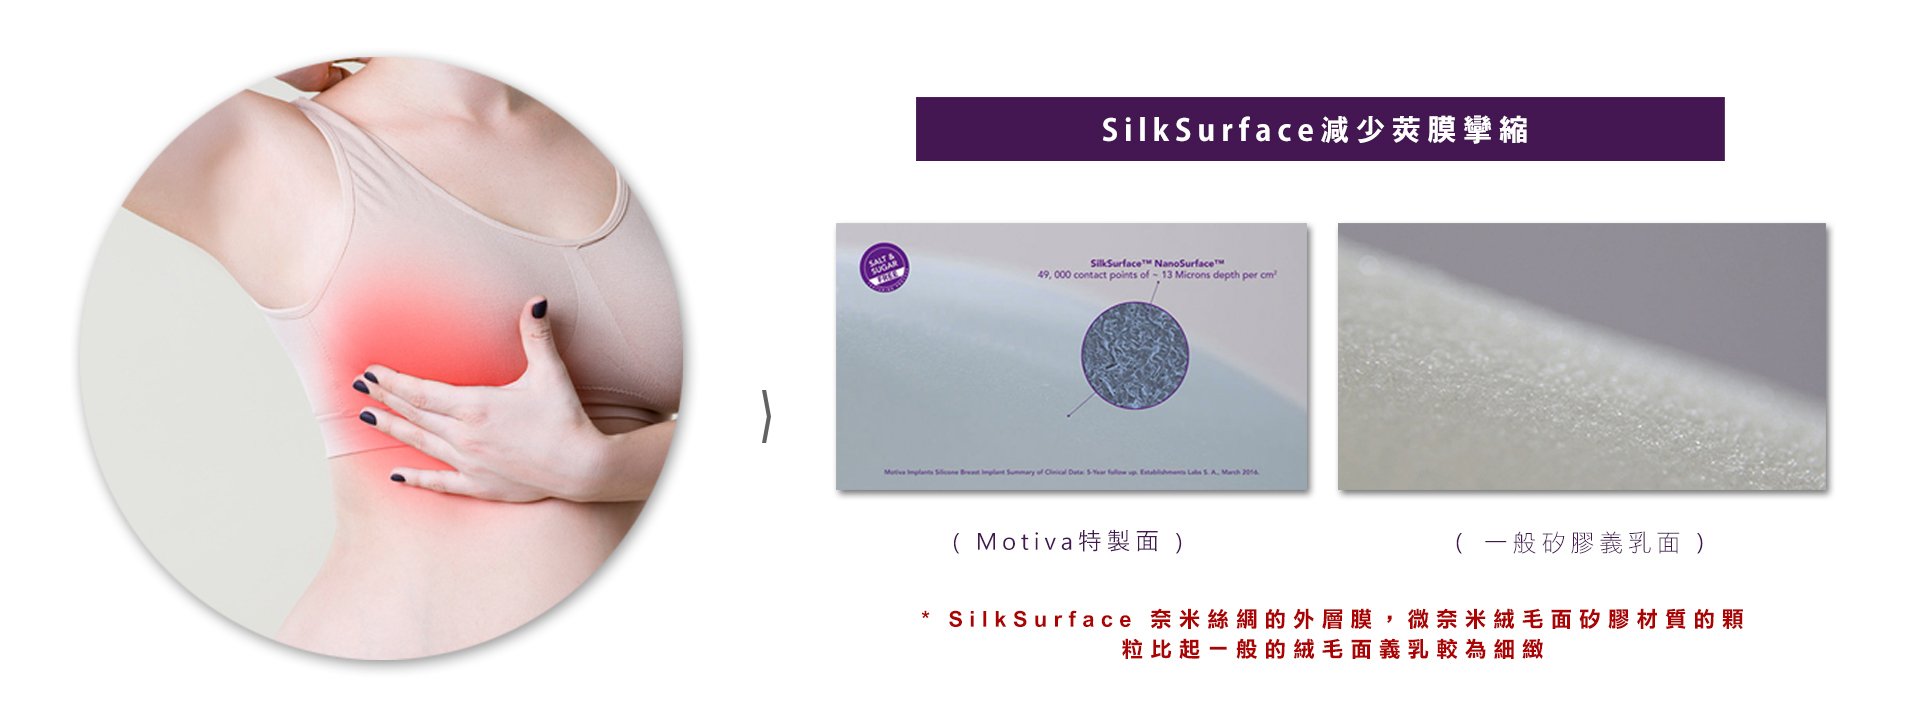 SilkSurface減少莢膜攣縮  SilkSurface 奈米絲綢的外層膜，微奈米絨毛面矽膠材質的顆粒比起一般的絨毛面義乳較為細緻